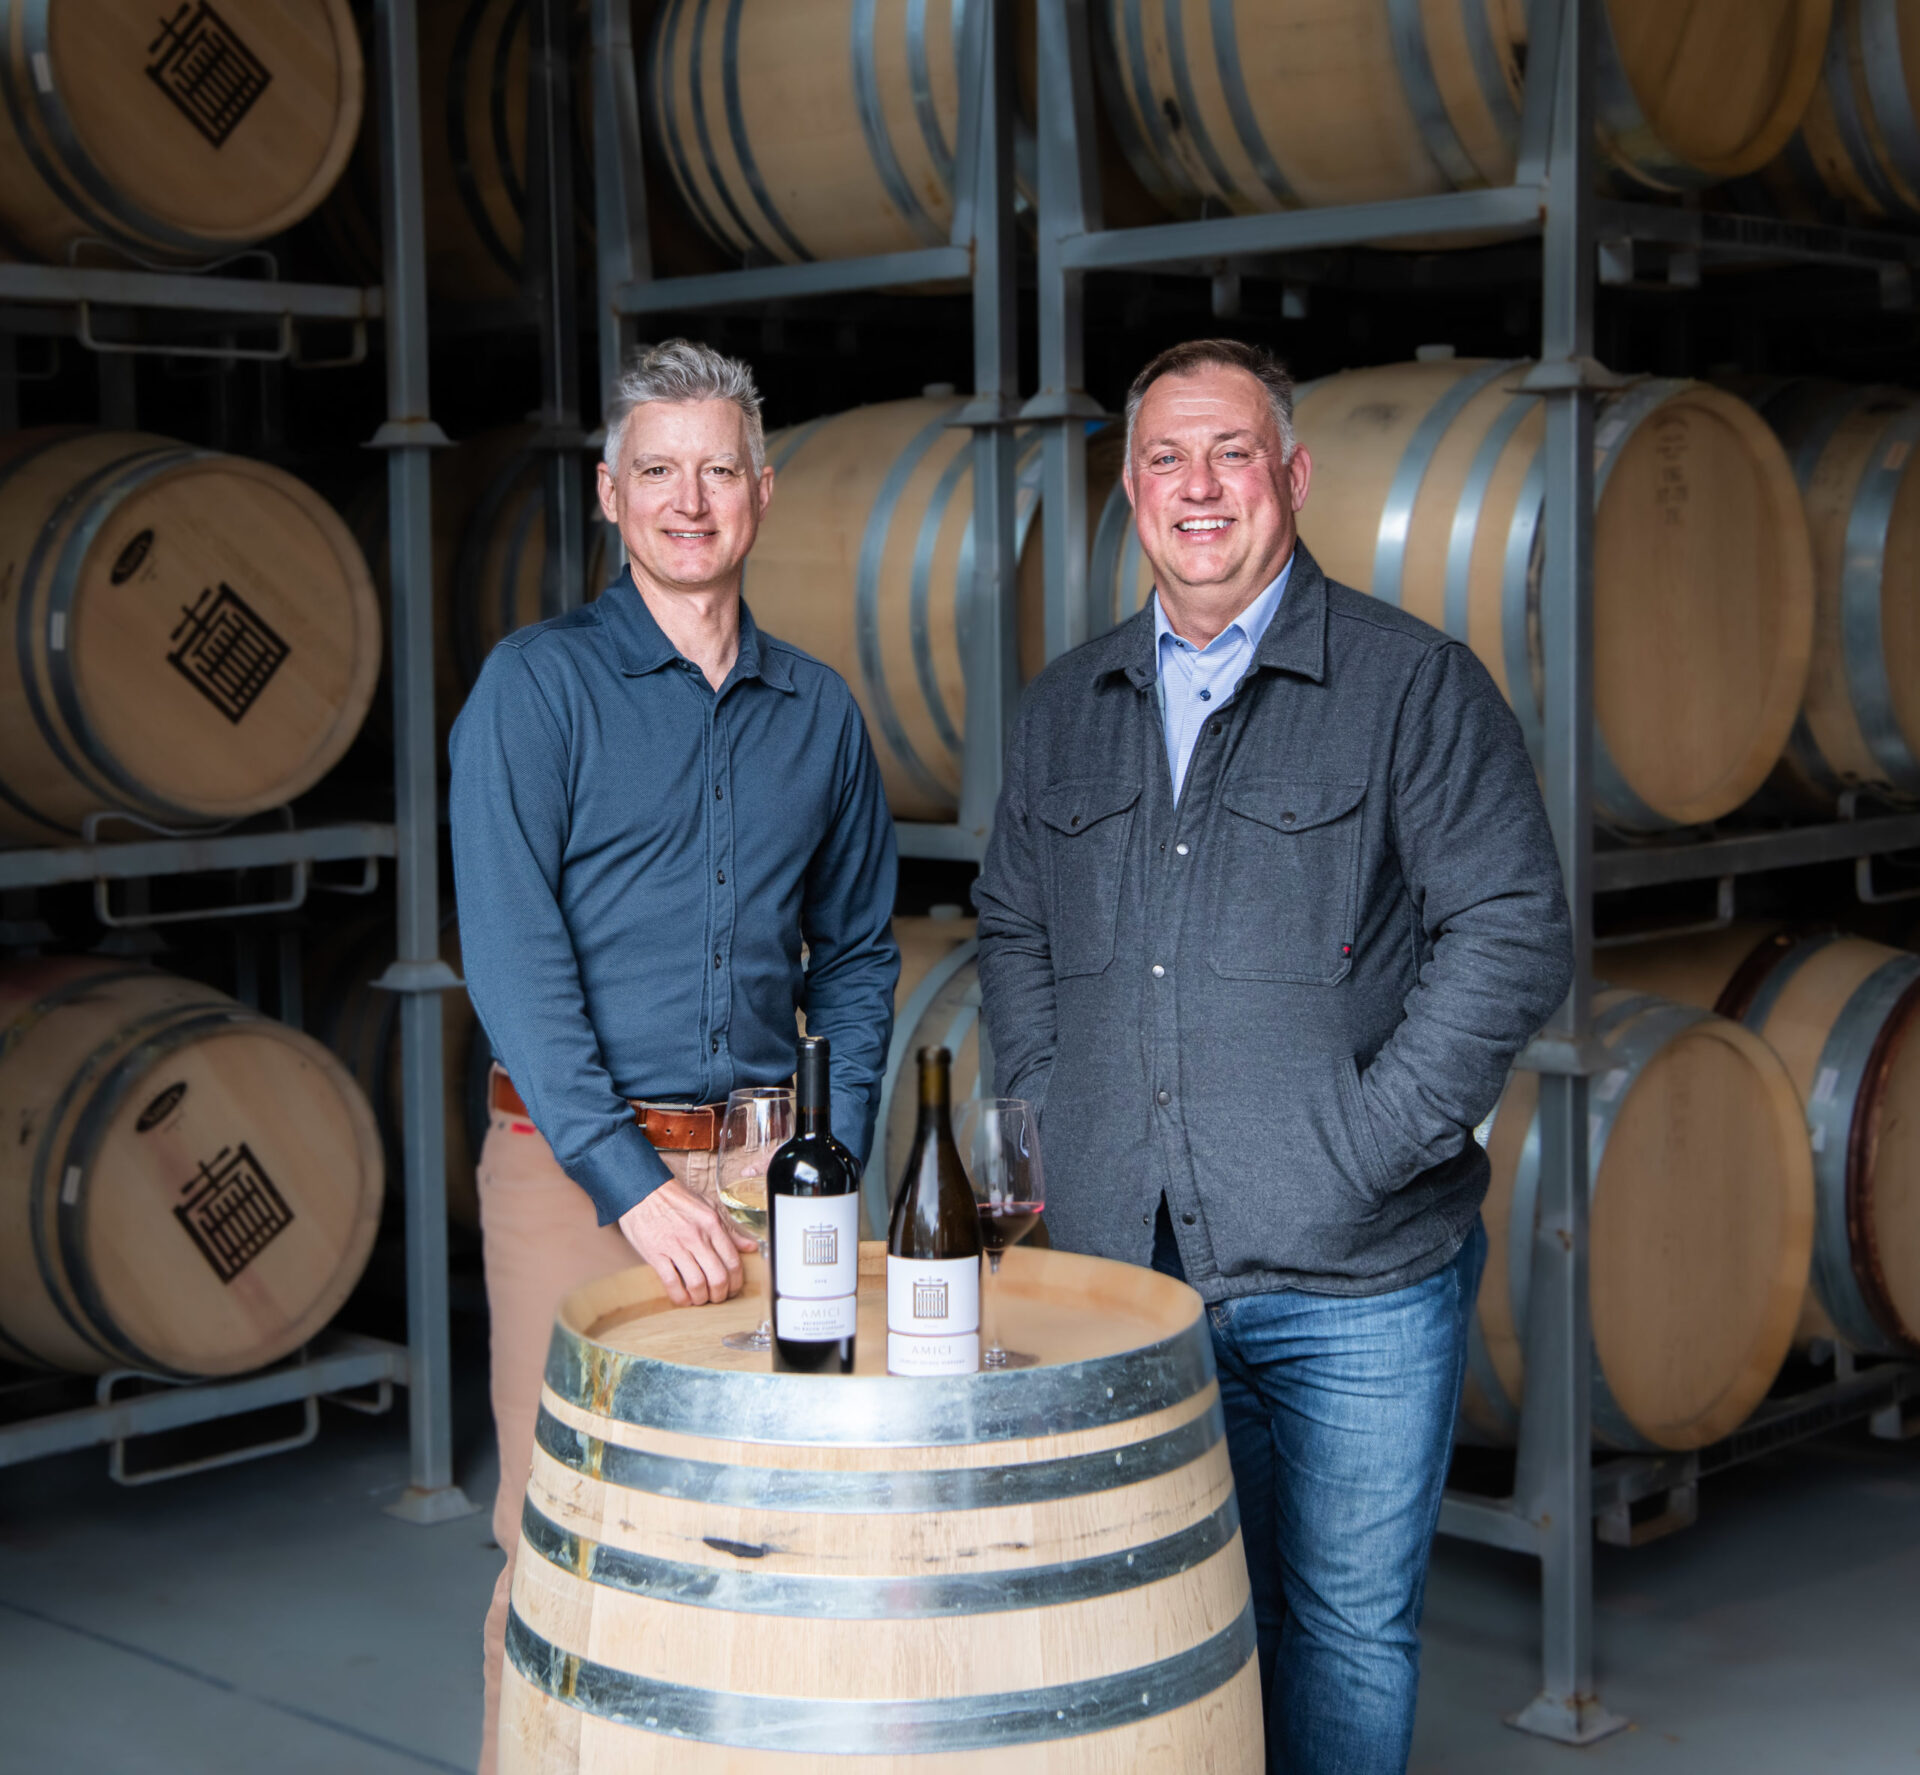 https://wineindustryadvisor.com/wp-content/uploads/2022/03/Amici-Cellars-Consulting-Winemaker-Matt-Courtney-with-Winemaker-Tony-Biagi-scaled.jpg